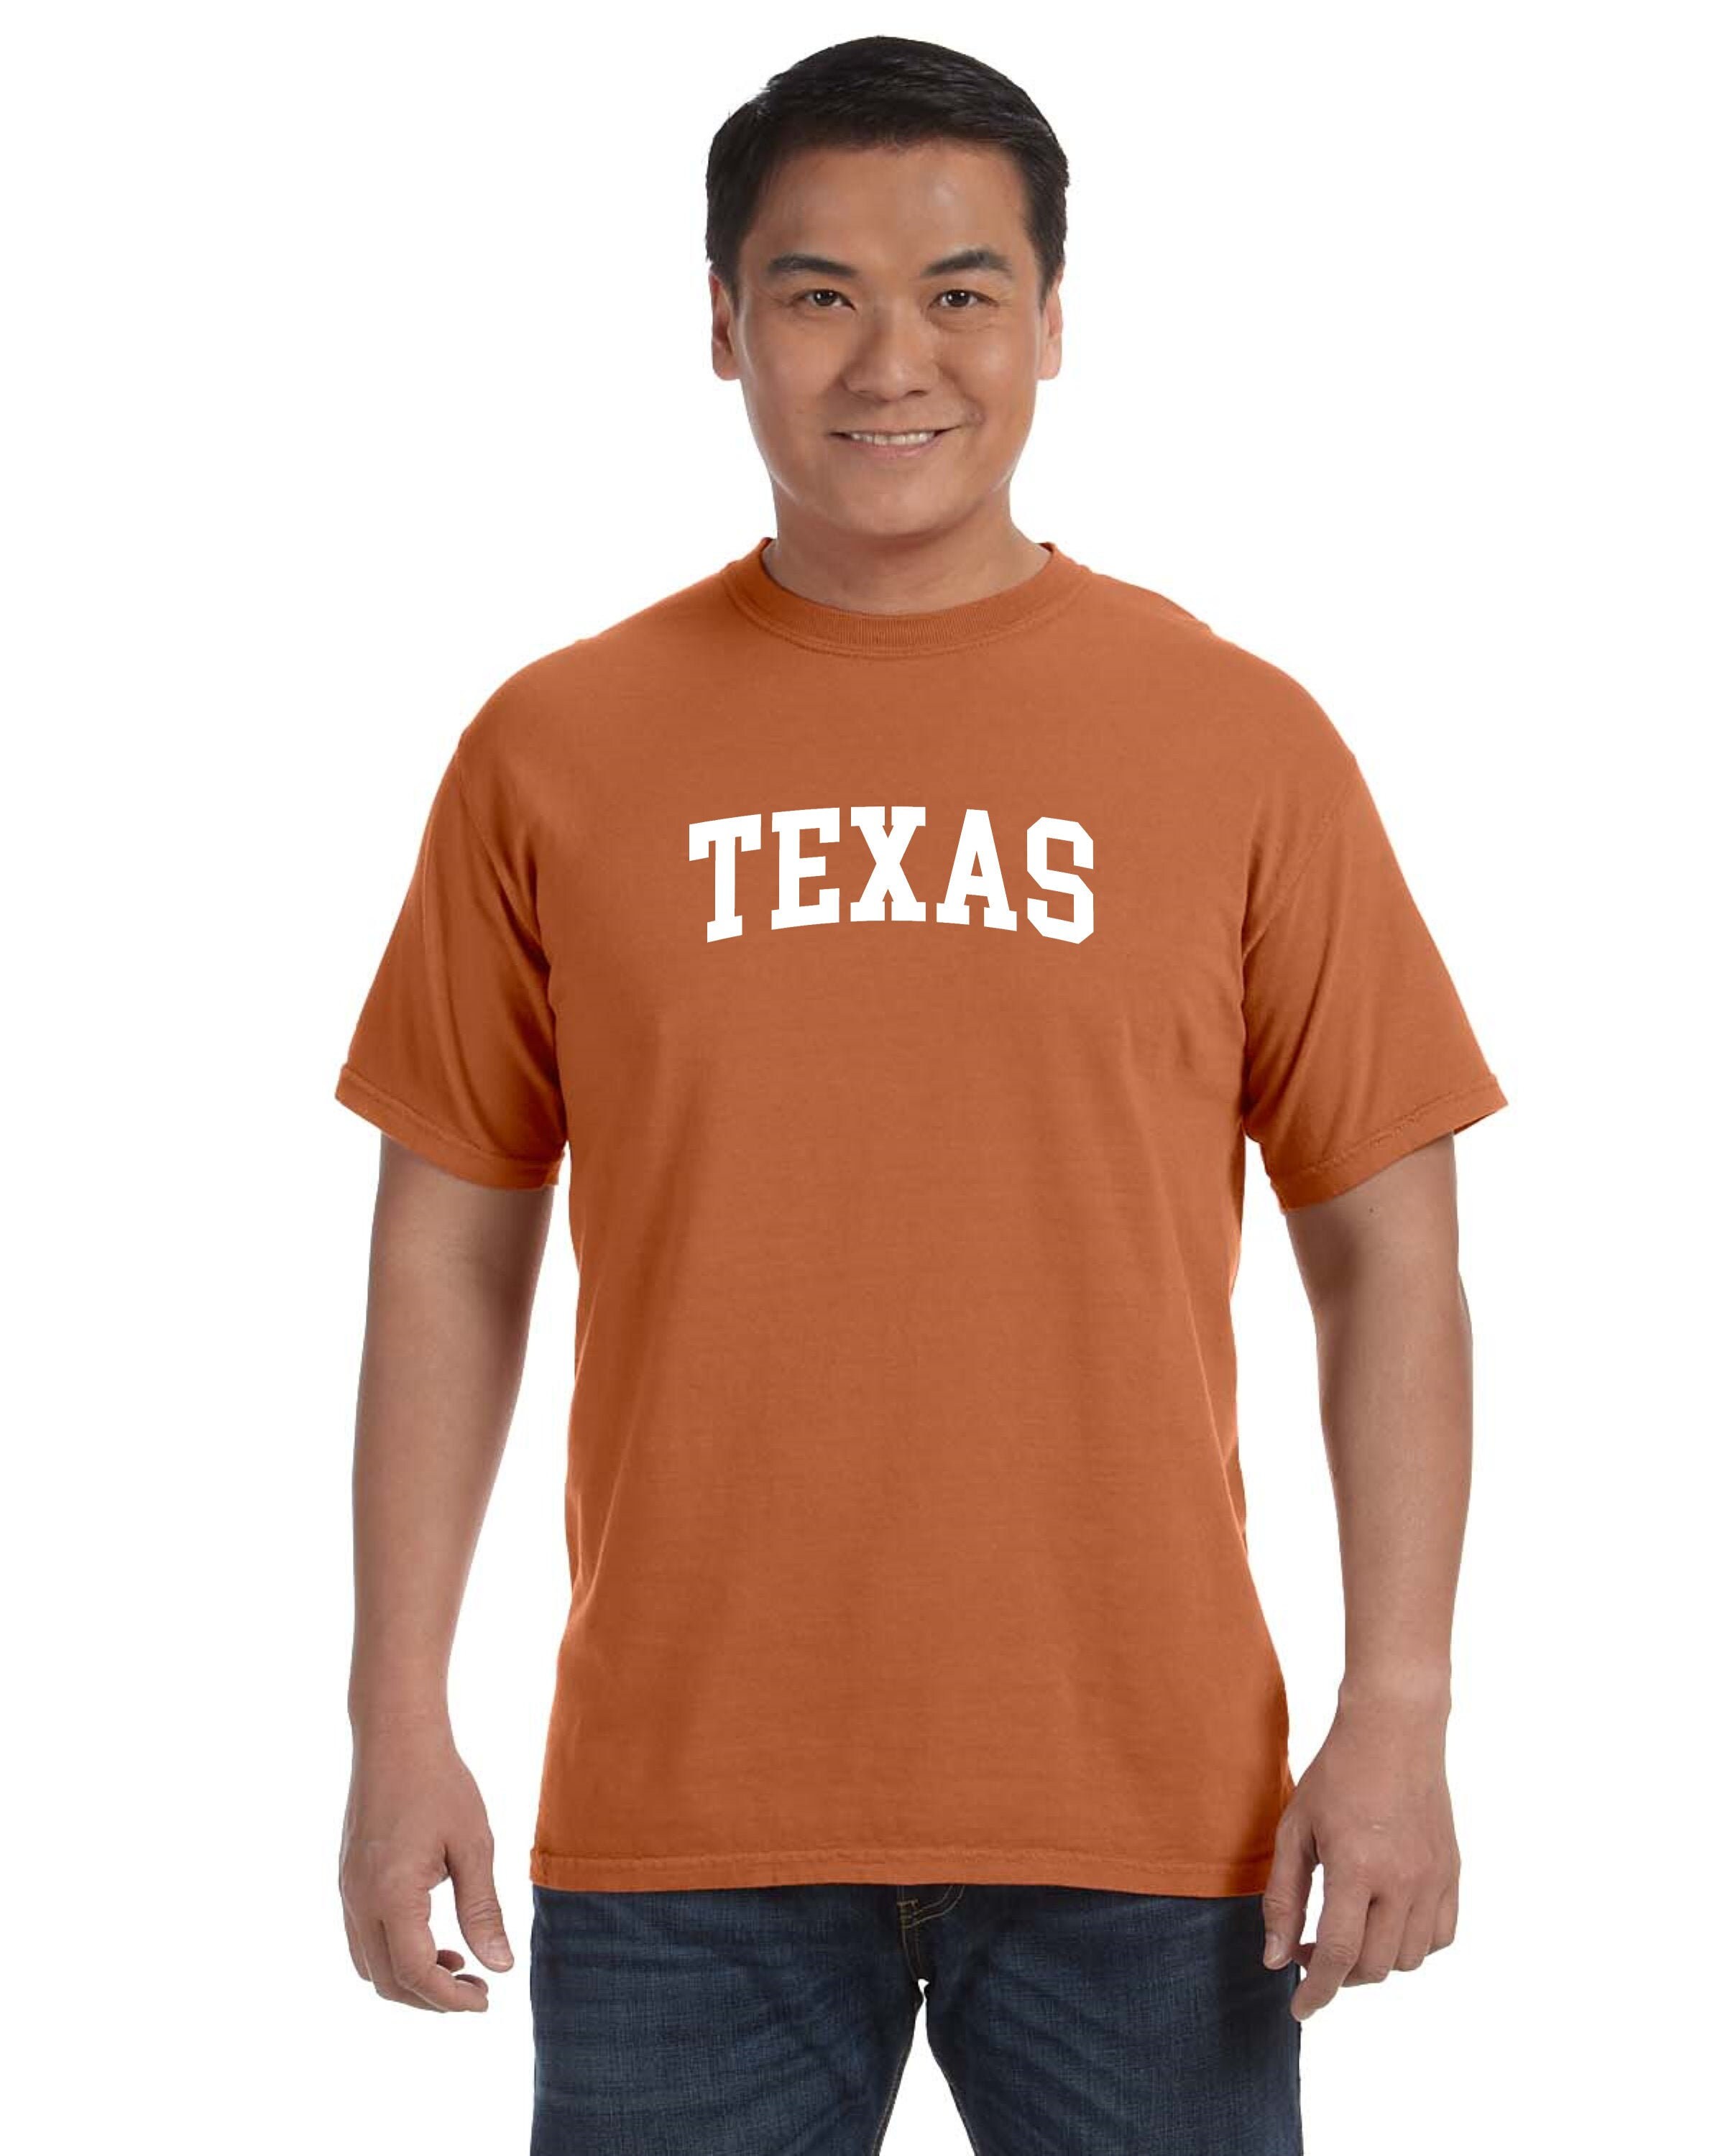 Texas Comfort Colors shirt Texas Gift Shirt Texas Shirt | Etsy